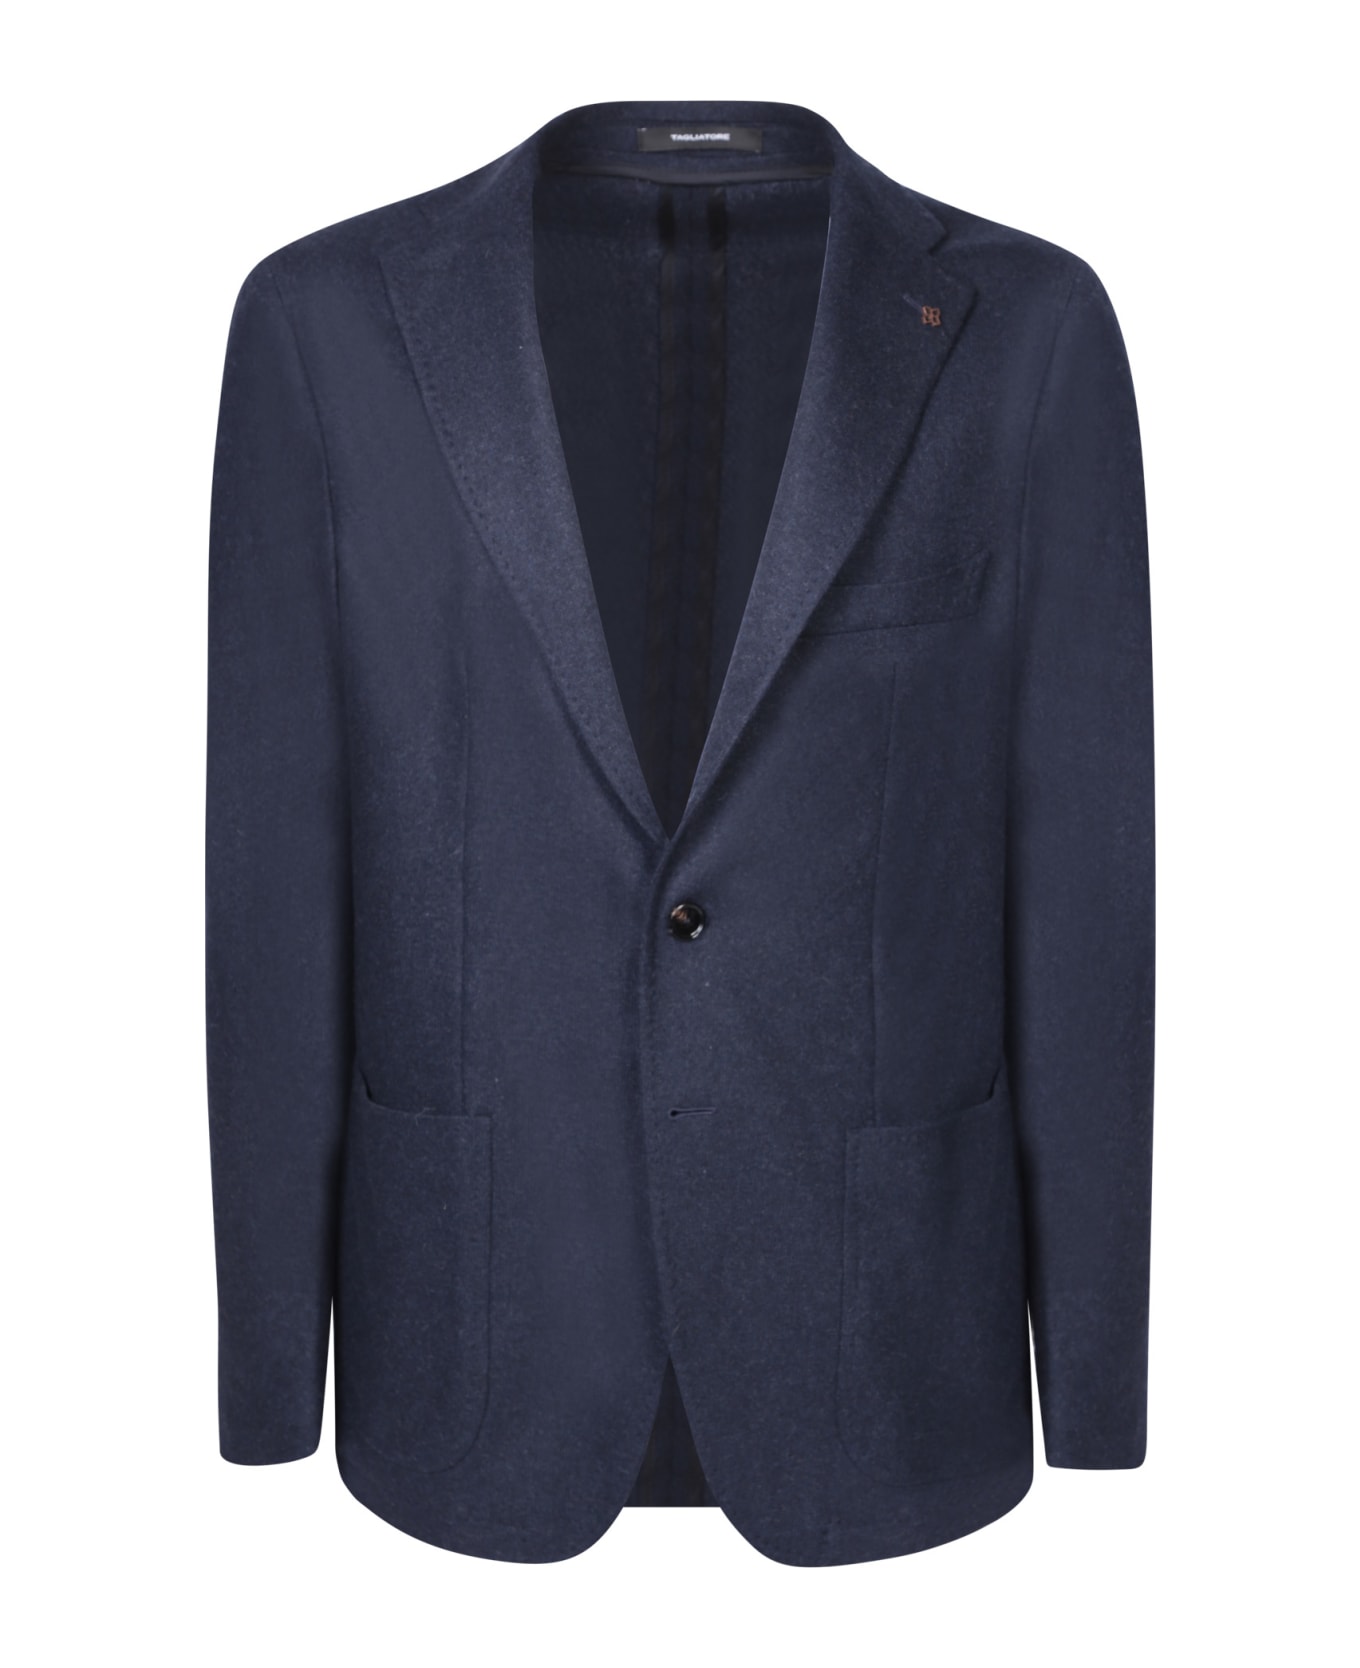 Tagliatore Single-breasted Jacket Blue Suit - Blue